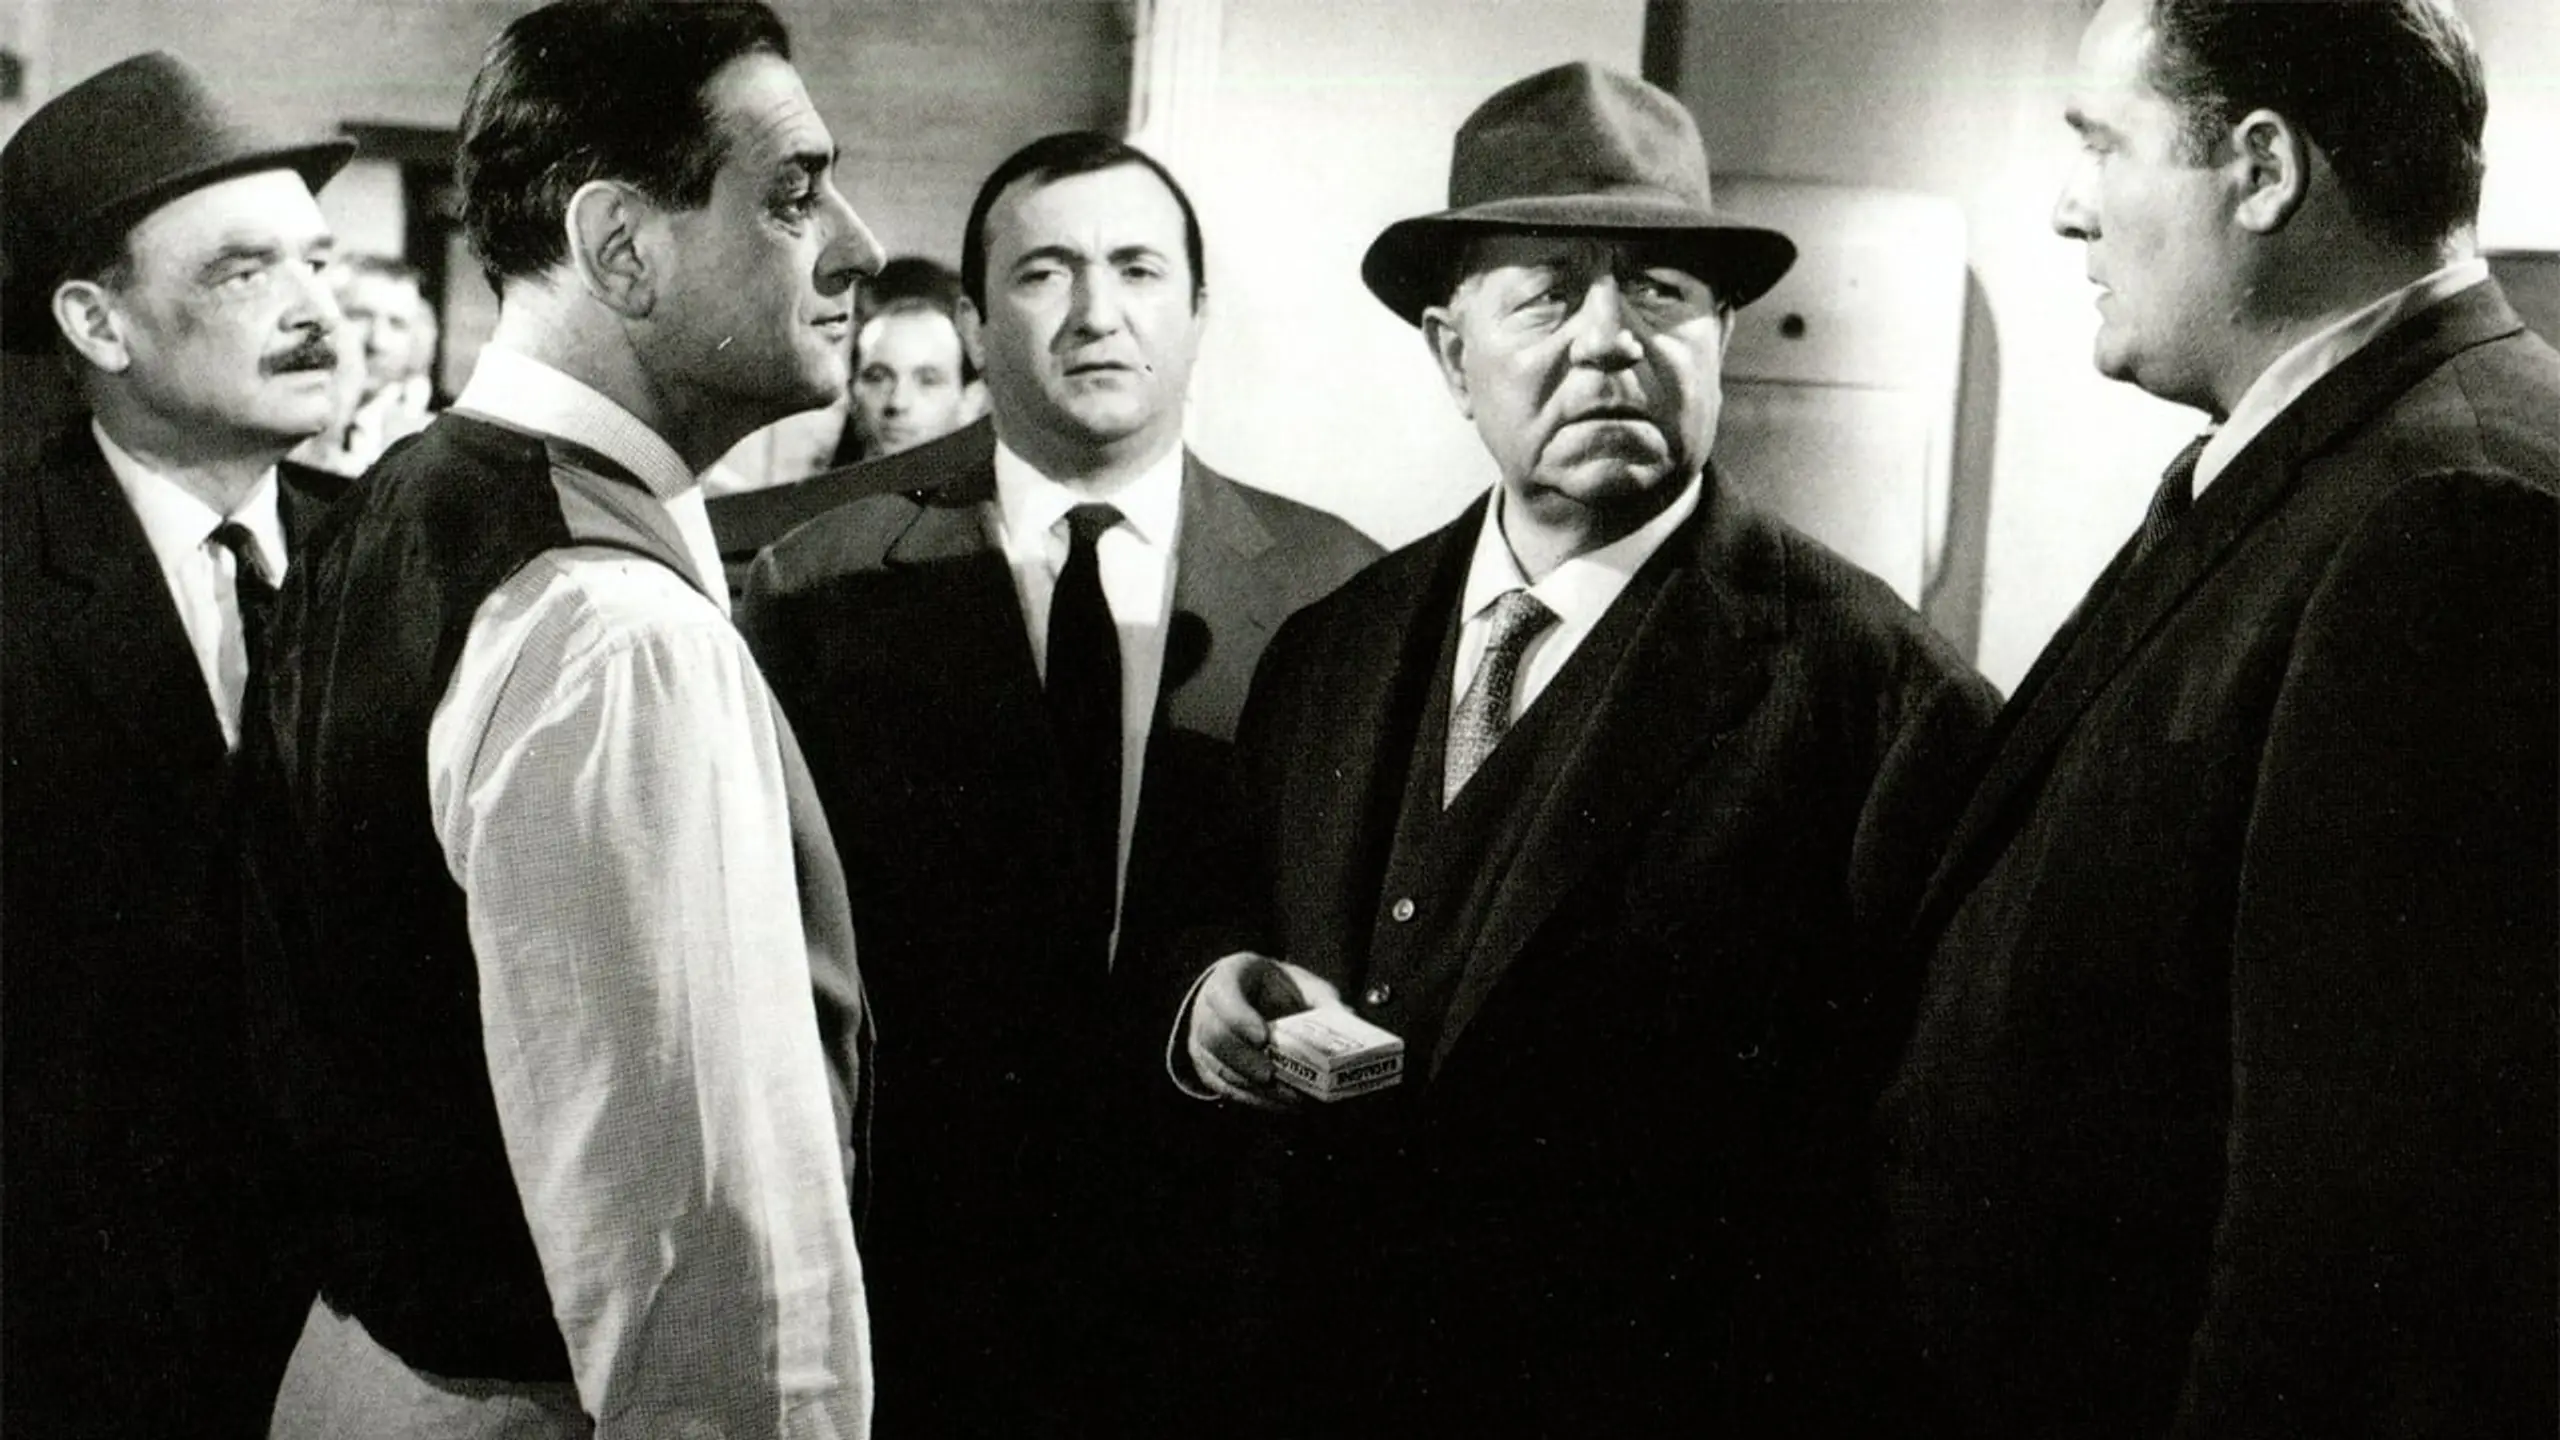 Kommissar Maigret sieht rot!